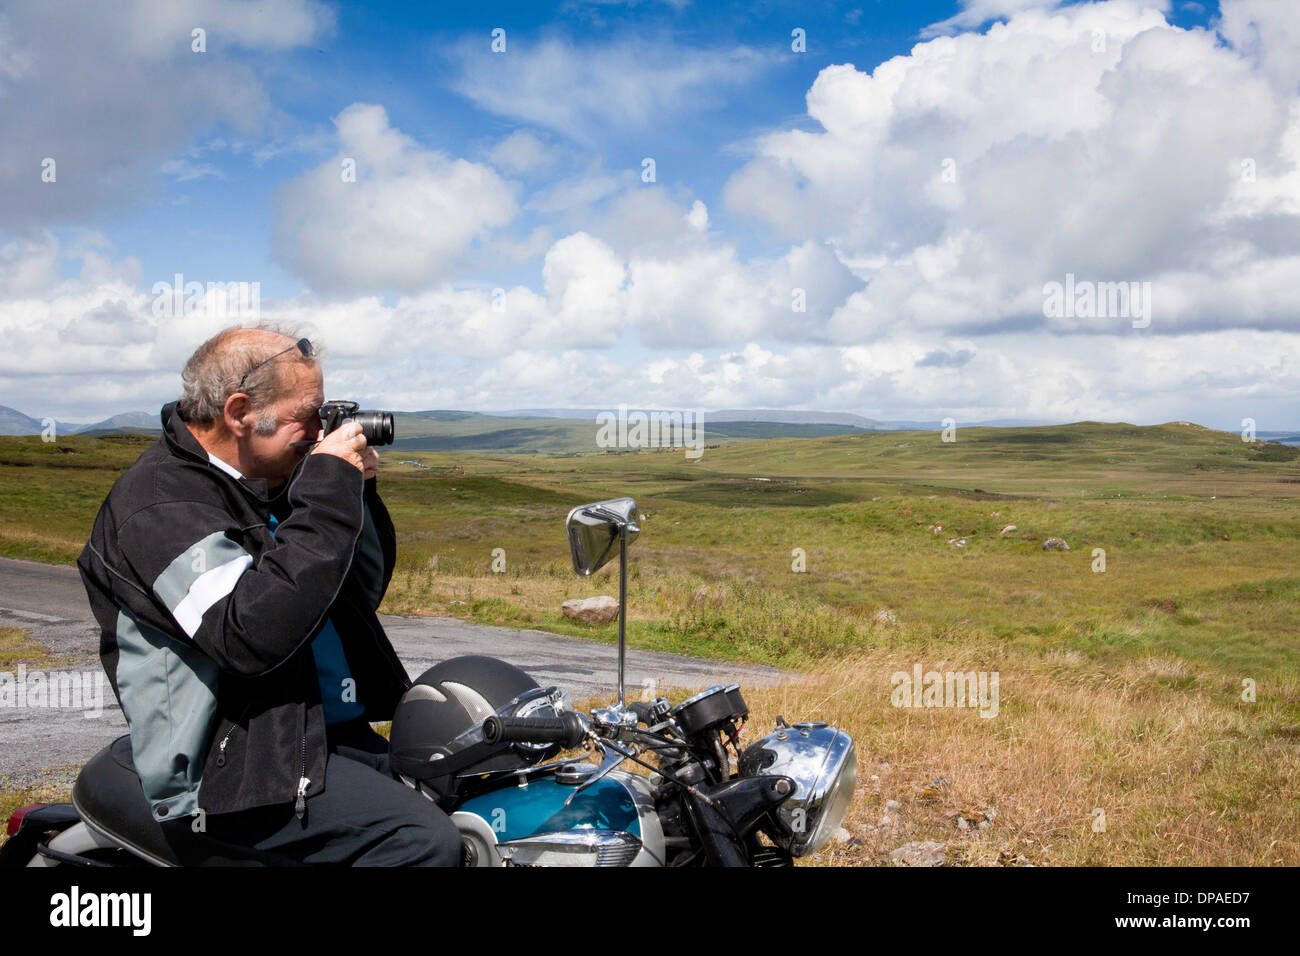 Senior male motorcyclist taking a photograph of scene Stock Photo